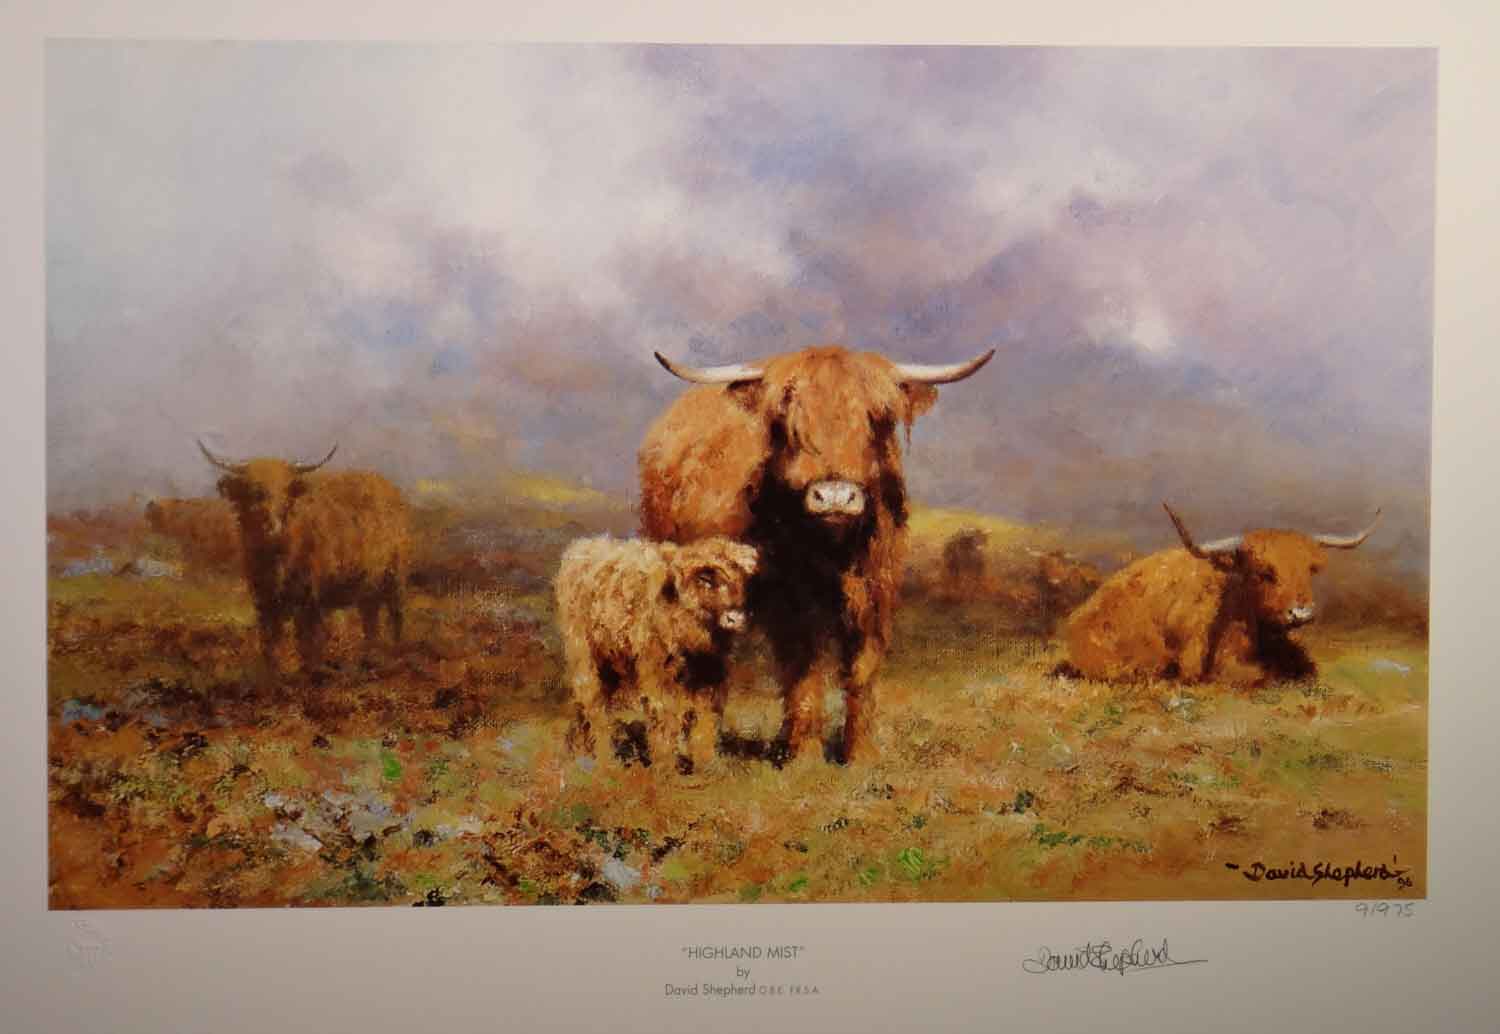 david shepherd, Highland mist, print